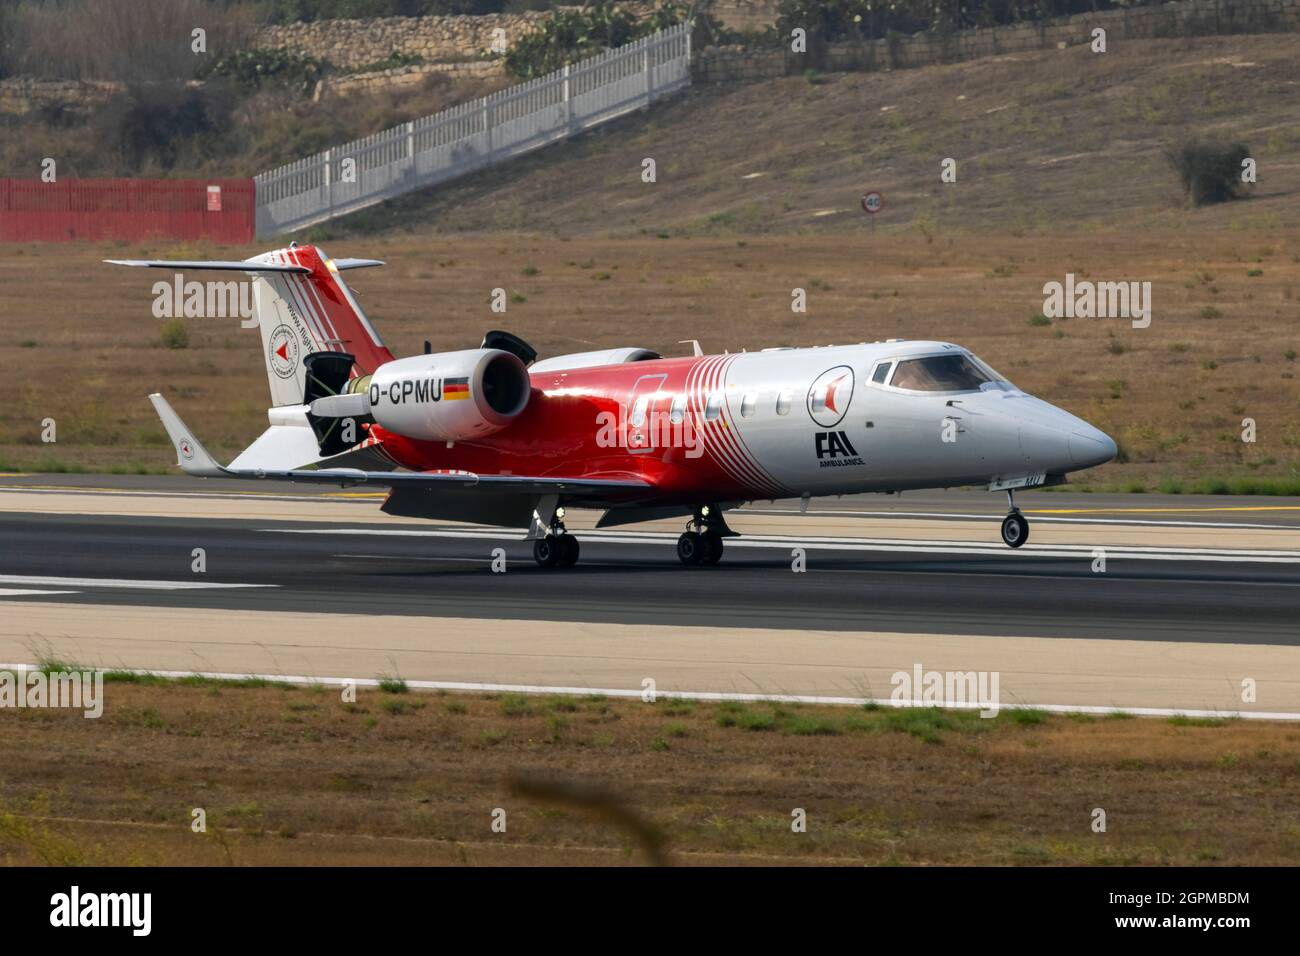 Fai (Flight Ambulance International) Learjet 60 (Reg: D-Cpmu) Arriving For  A Medevac Flight From Malta Stock Photo - Alamy